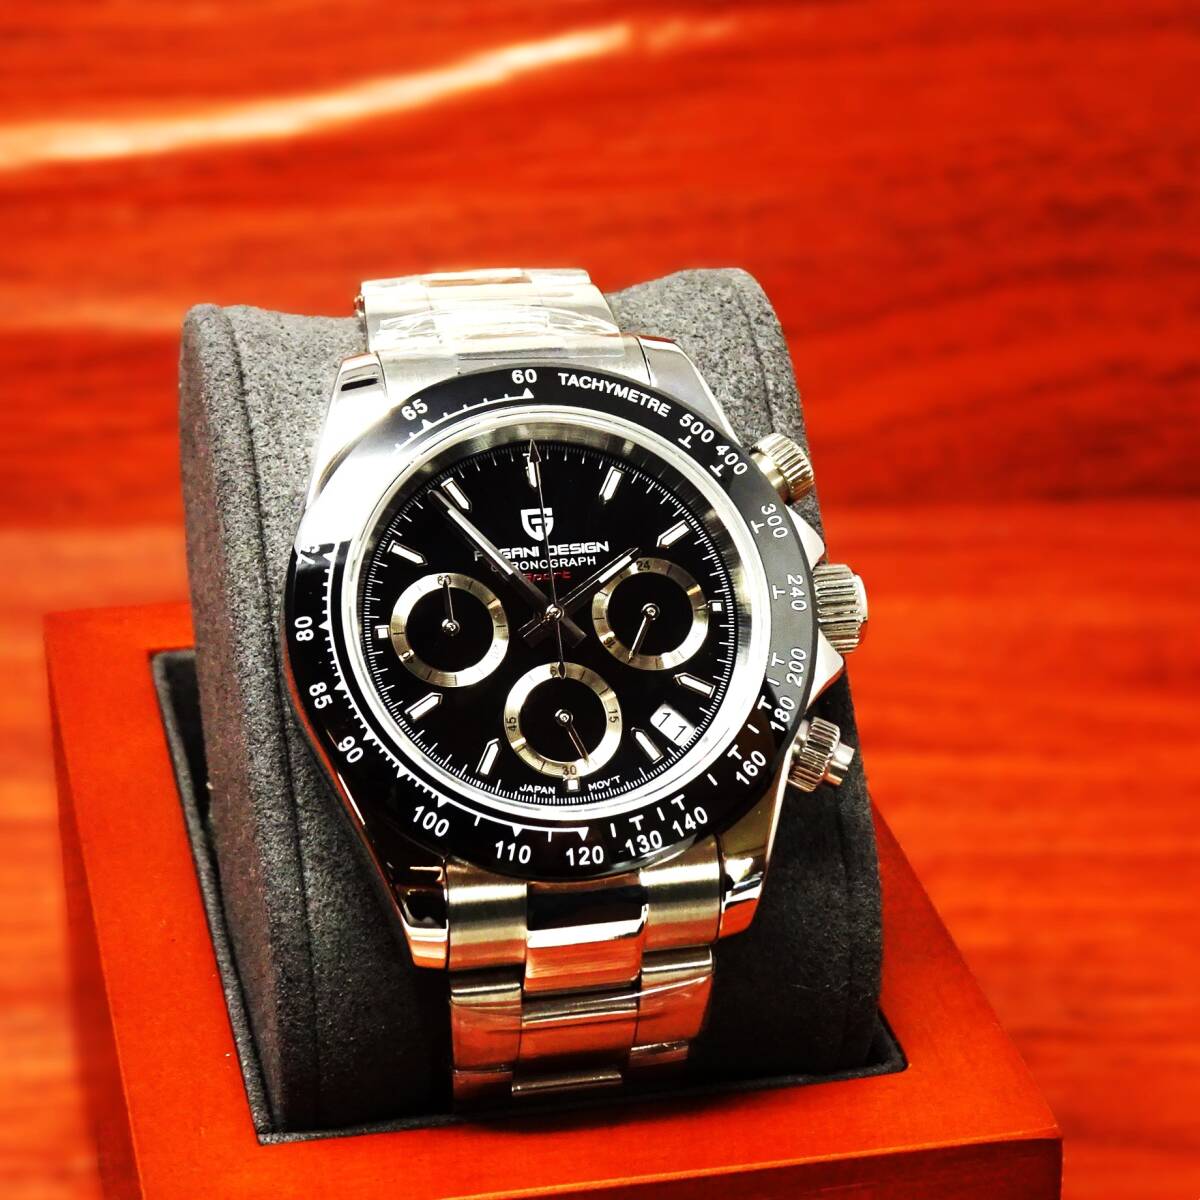  free shipping * new goods * Pagani design * men's * Seiko made VK63 chronograph quarts type wristwatch *oma-ju watch * stainless steel * black 